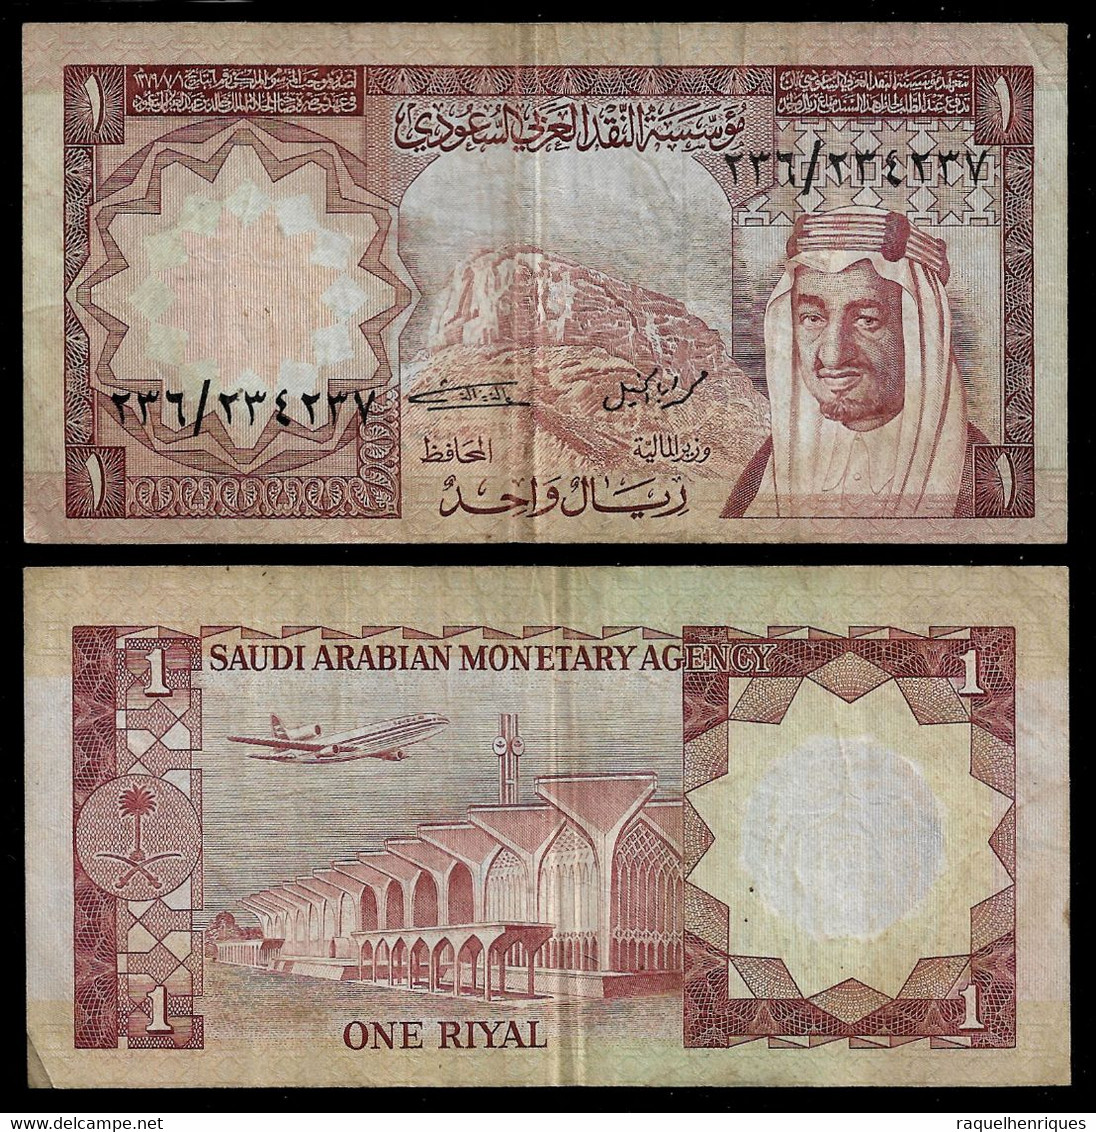 SAUDI ARABIA BANKNOTE - 1 RIYAL (1977) P#16 F/VF (NT#03) - Arabia Saudita